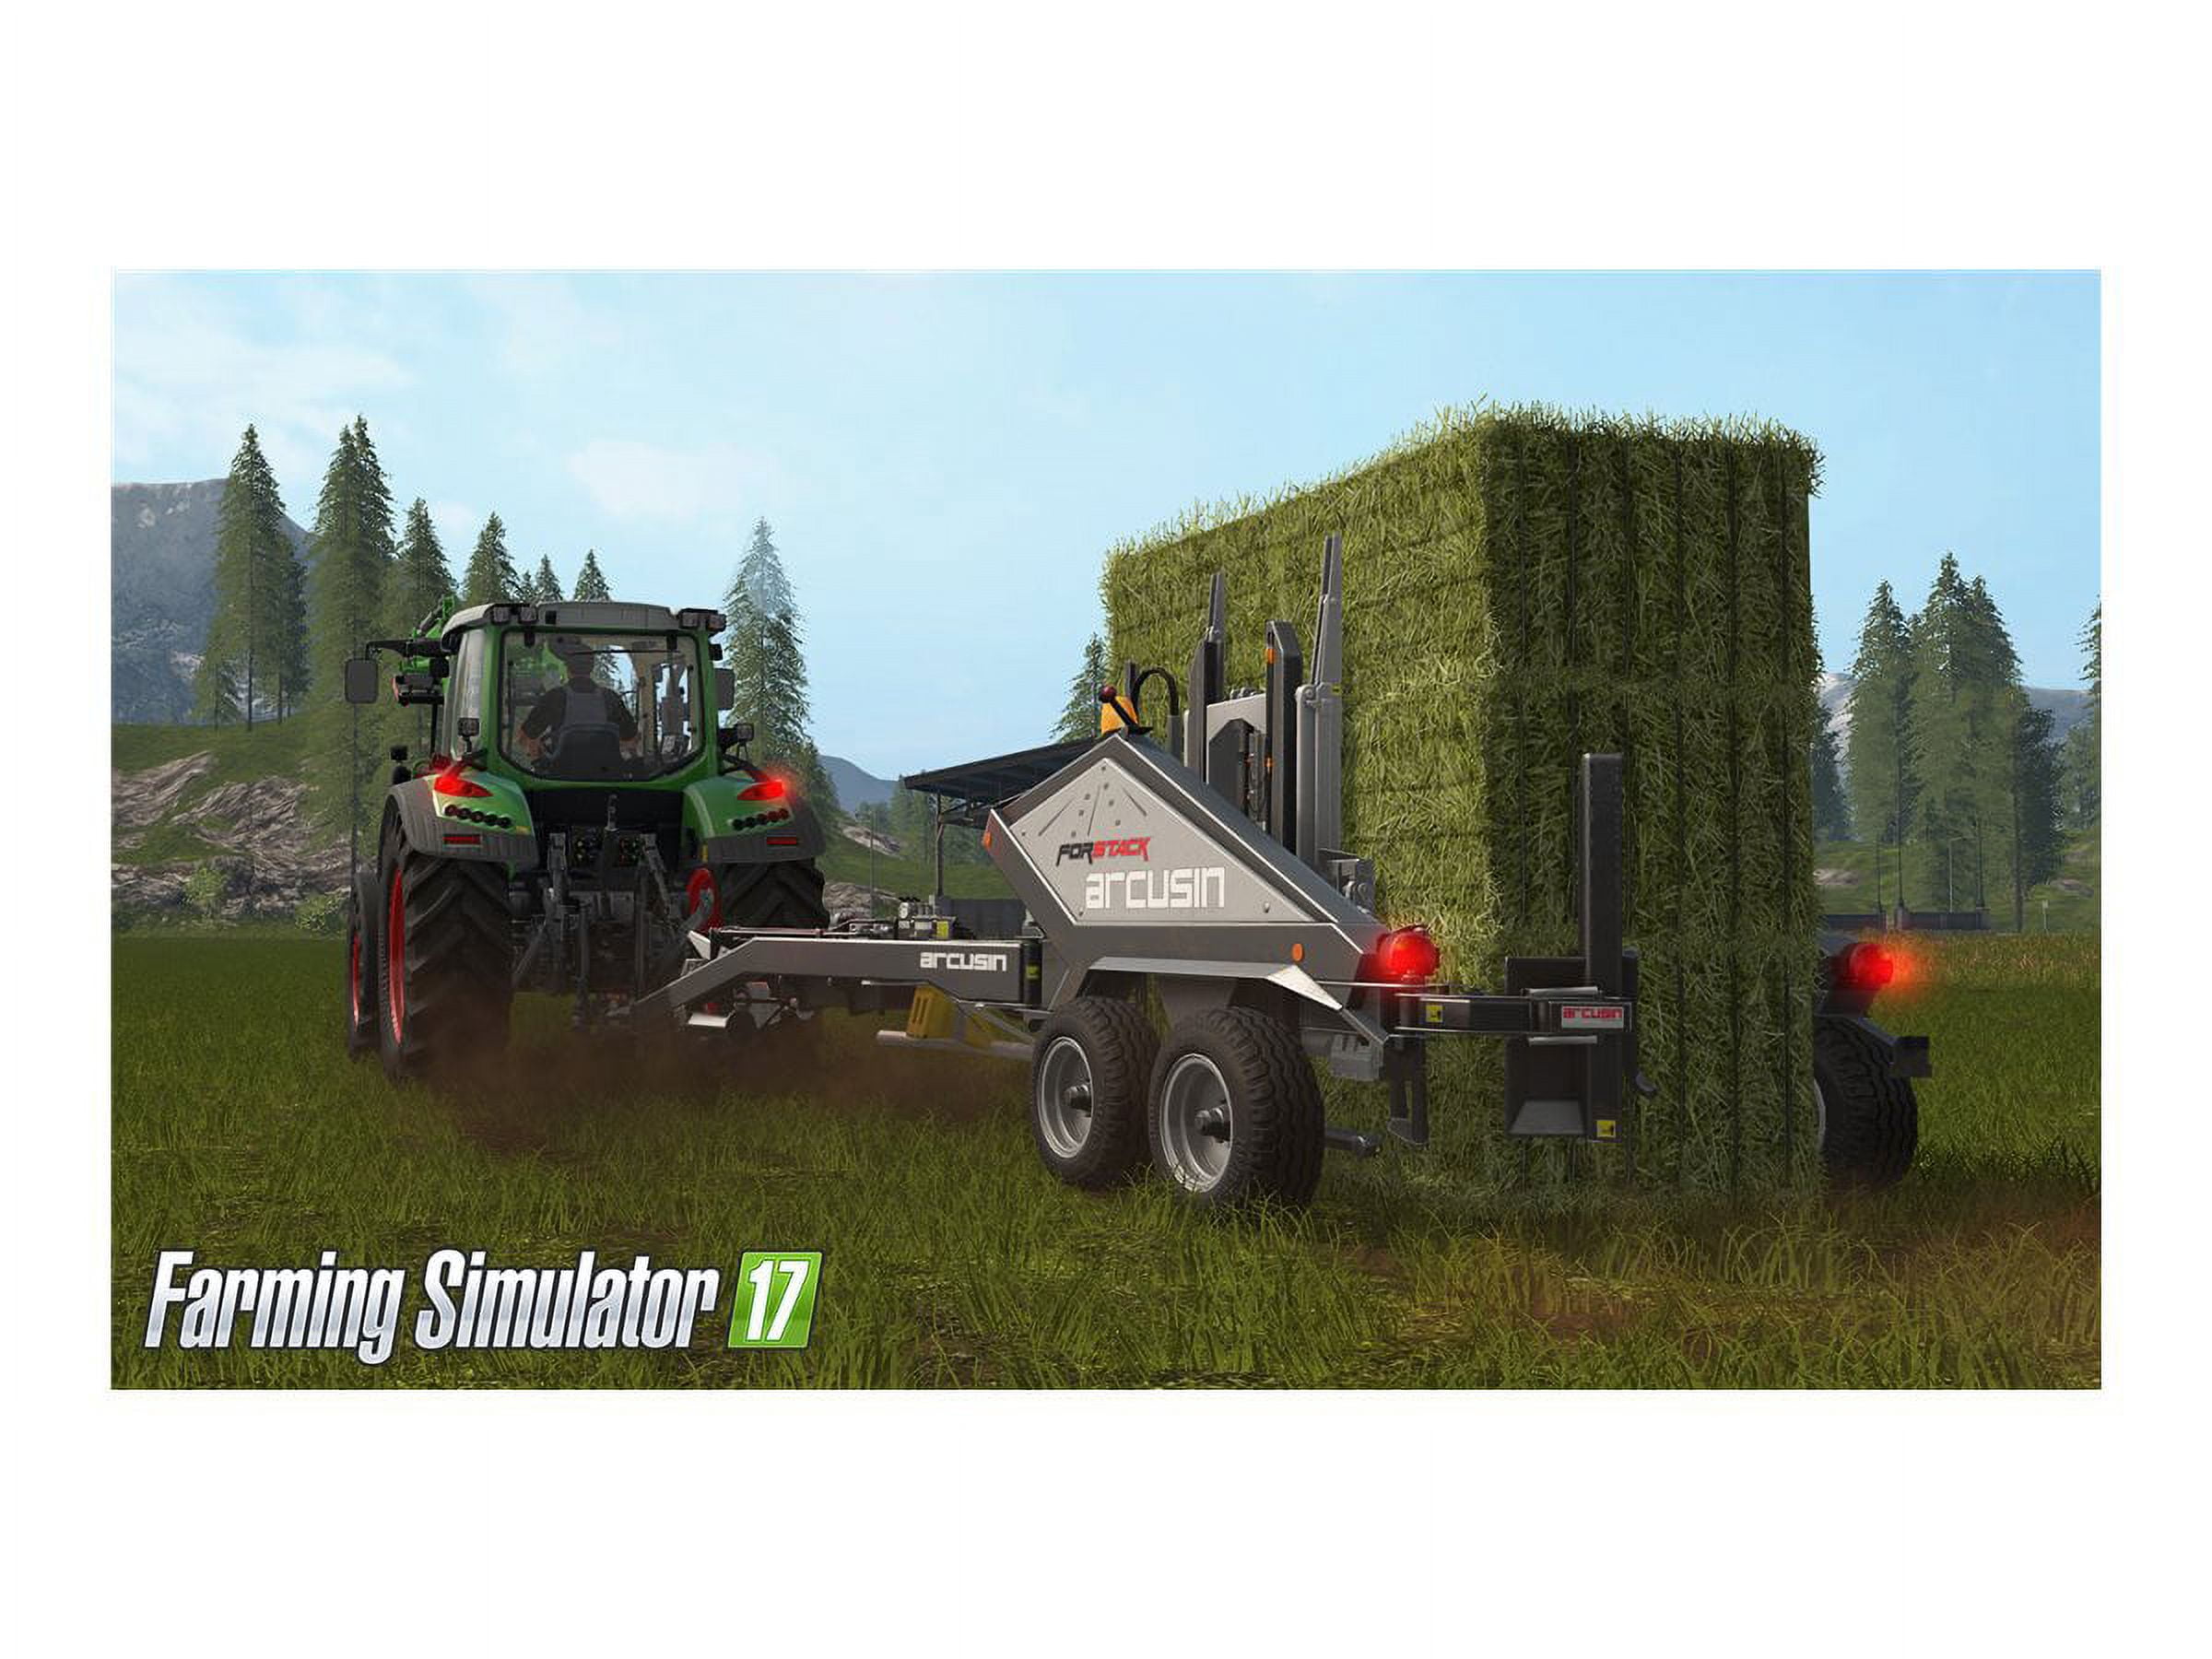 Comprar Farming Simulator 20 - Nintendo Switch Mídia Digital - de